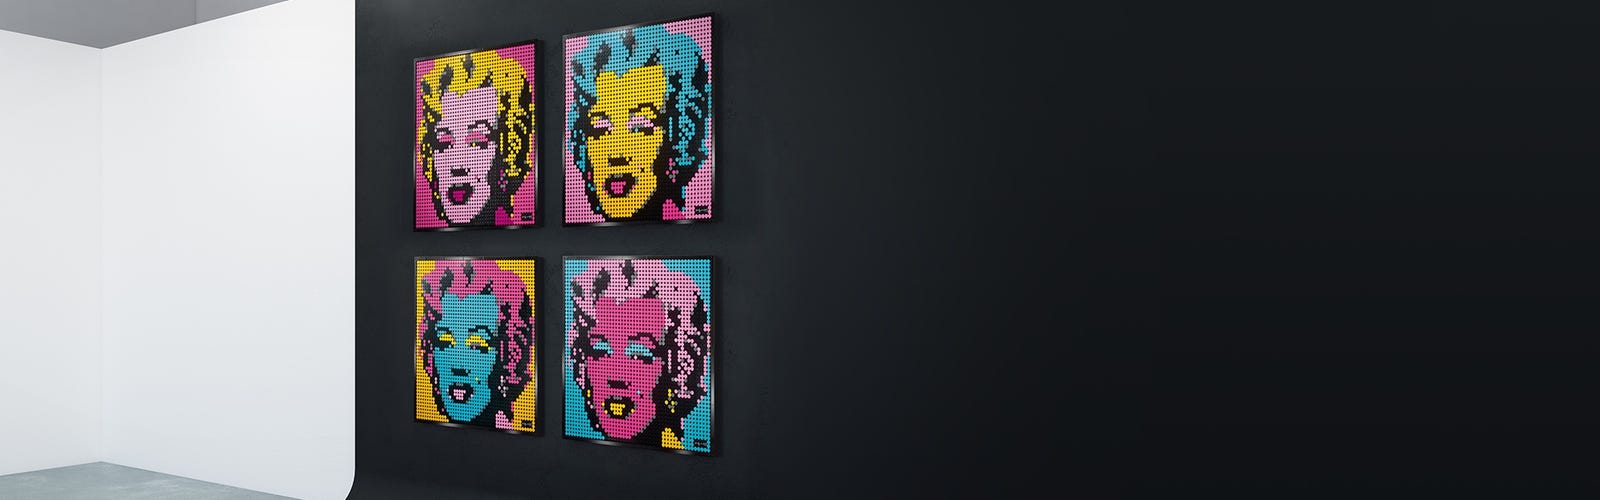 Andy Warhol's Marilyn Monroe 31197, Art